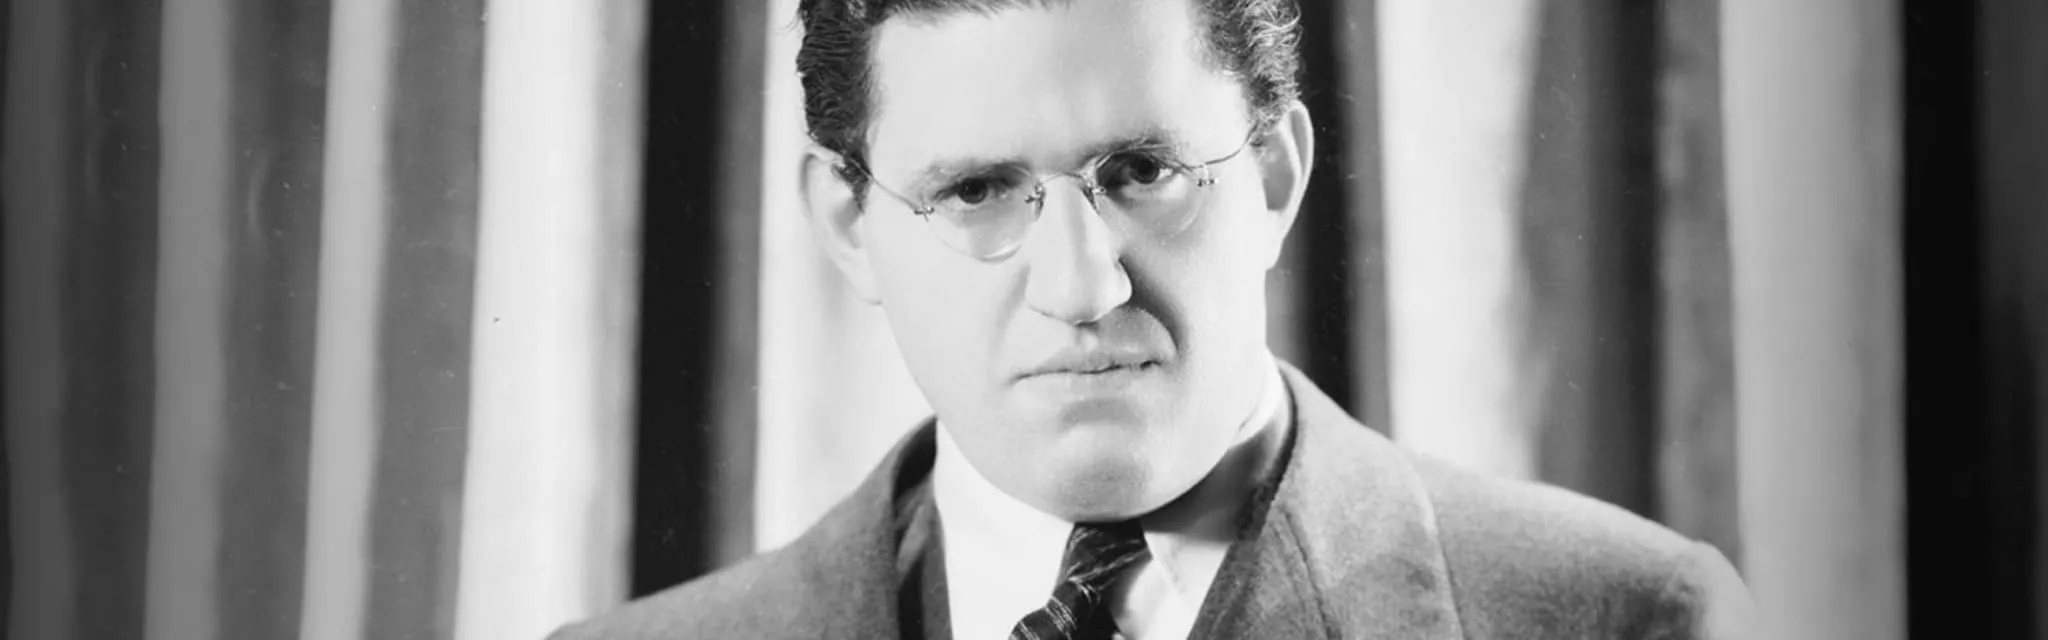 David O. Selznick - American film producer